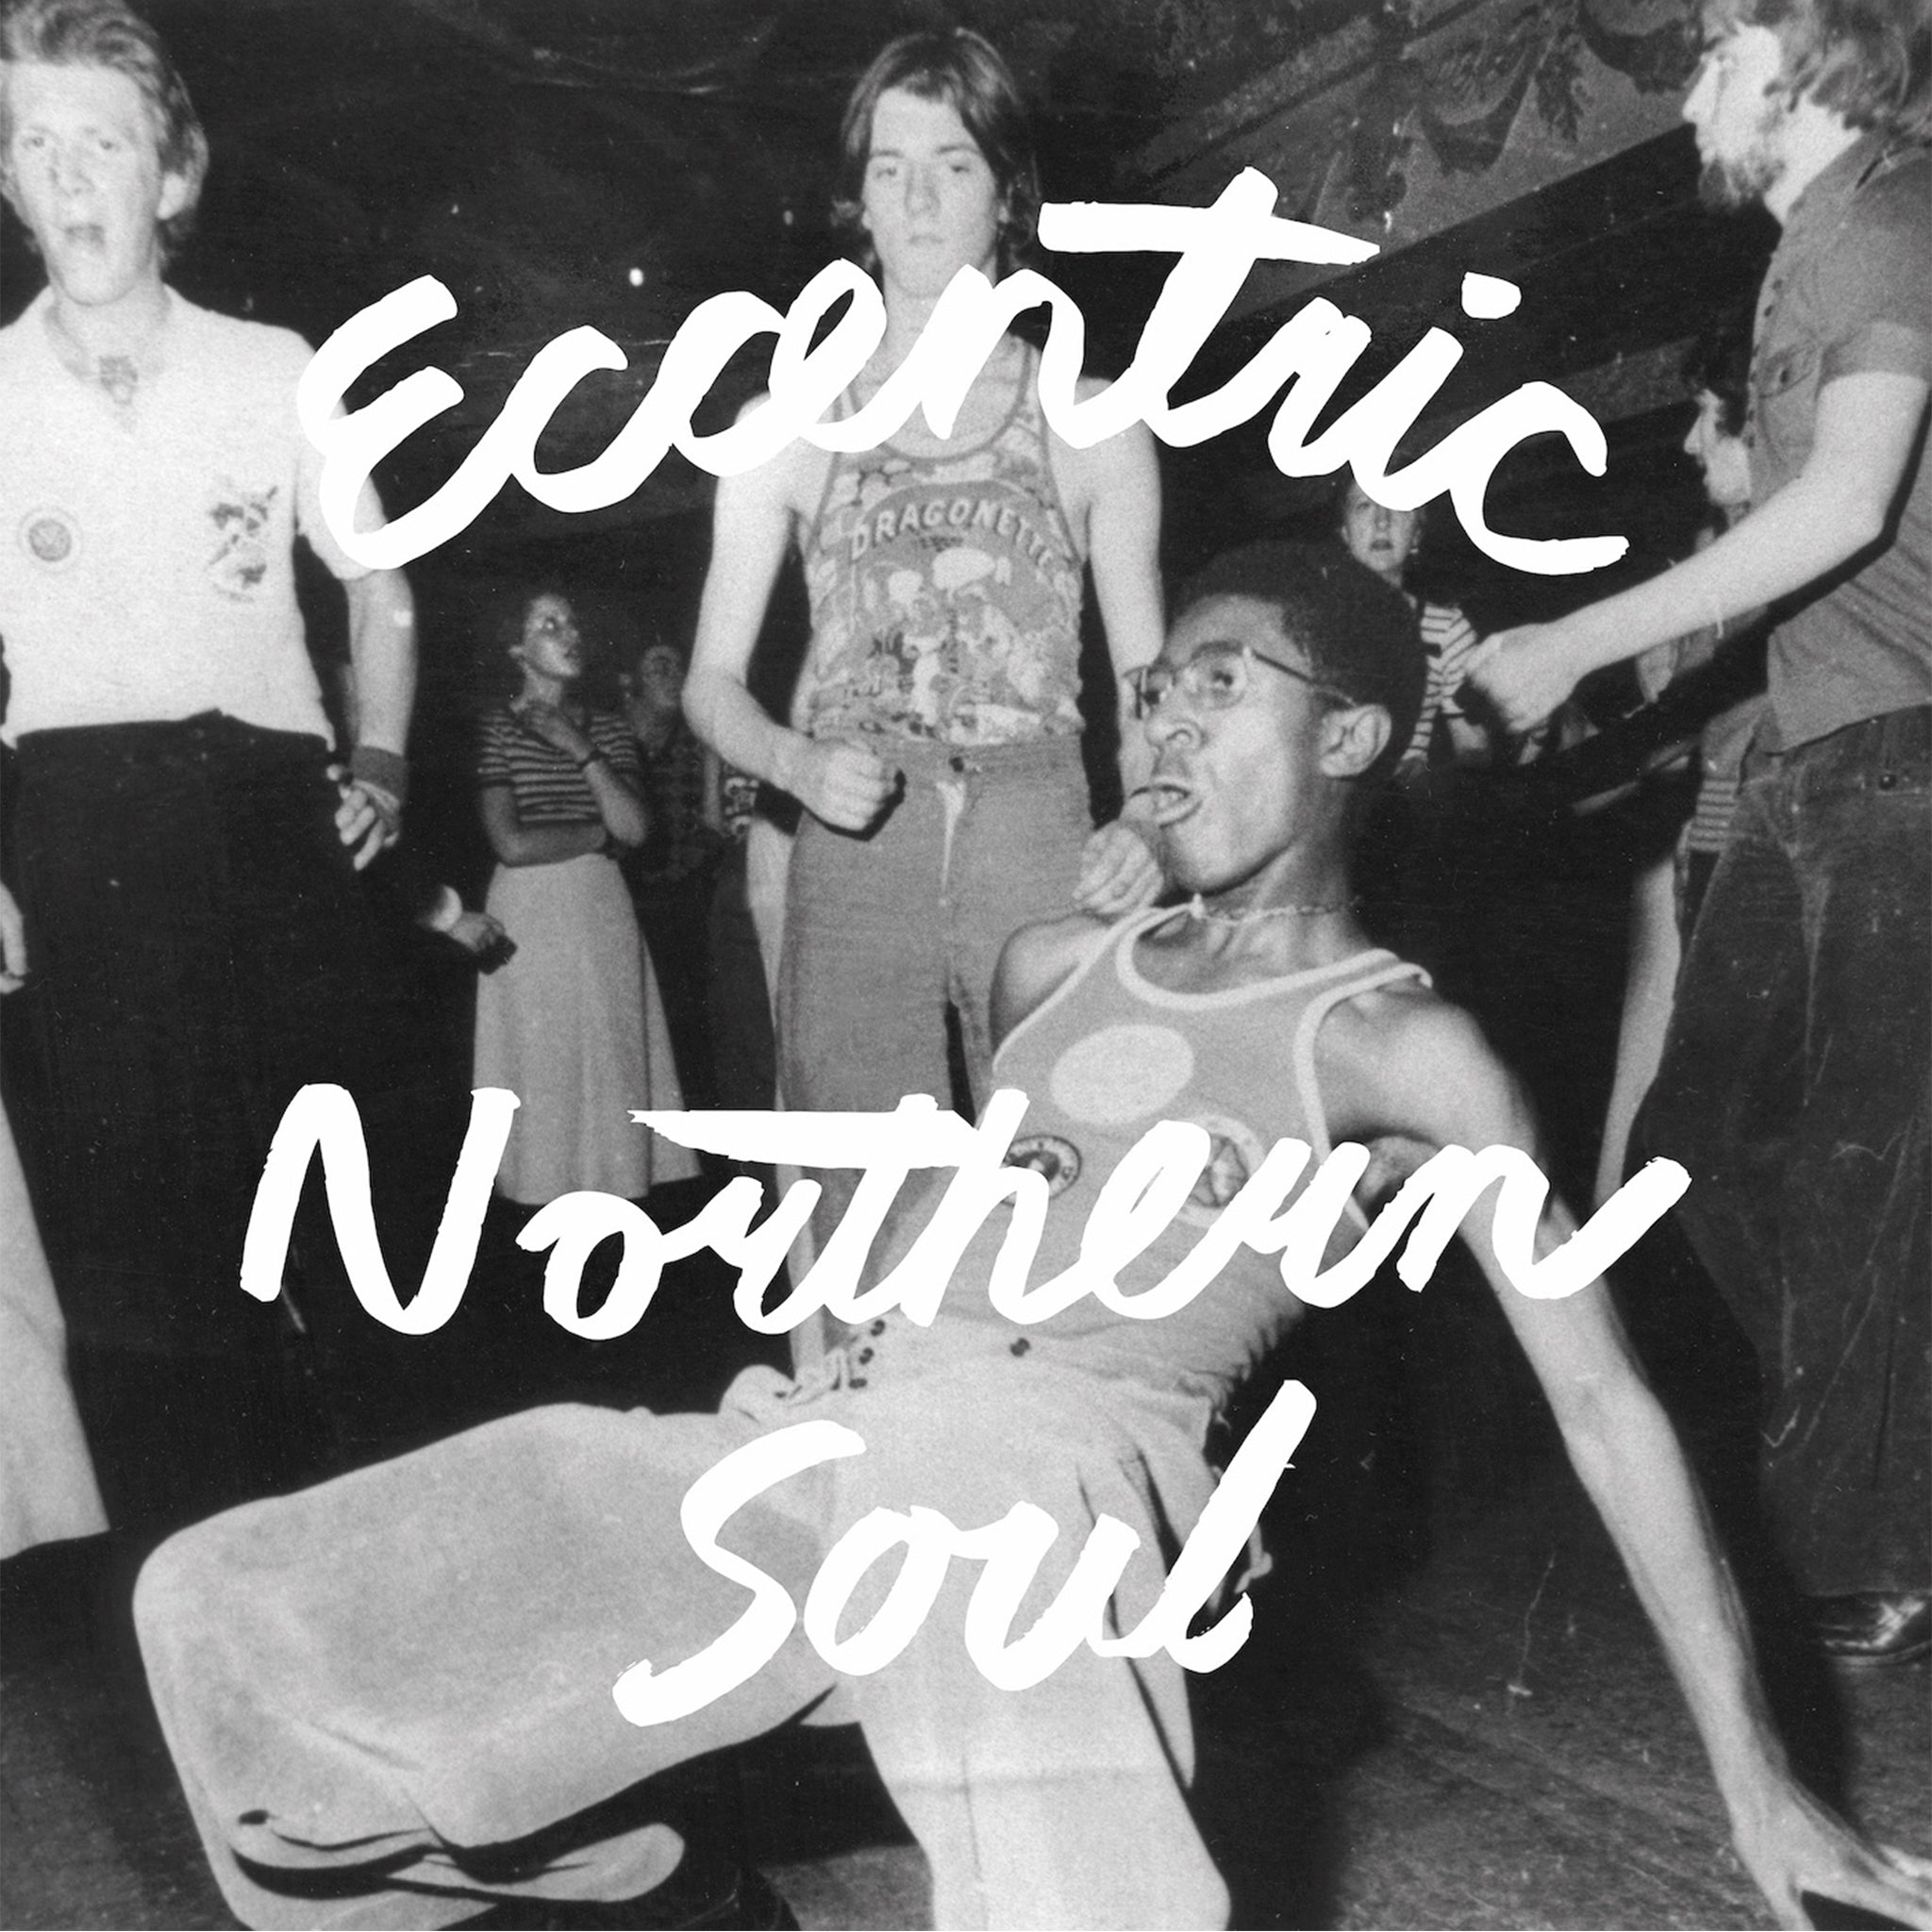 VARIOUS - Eccentric Northern Soul - LP - Clear Brown Smoke Vinyl